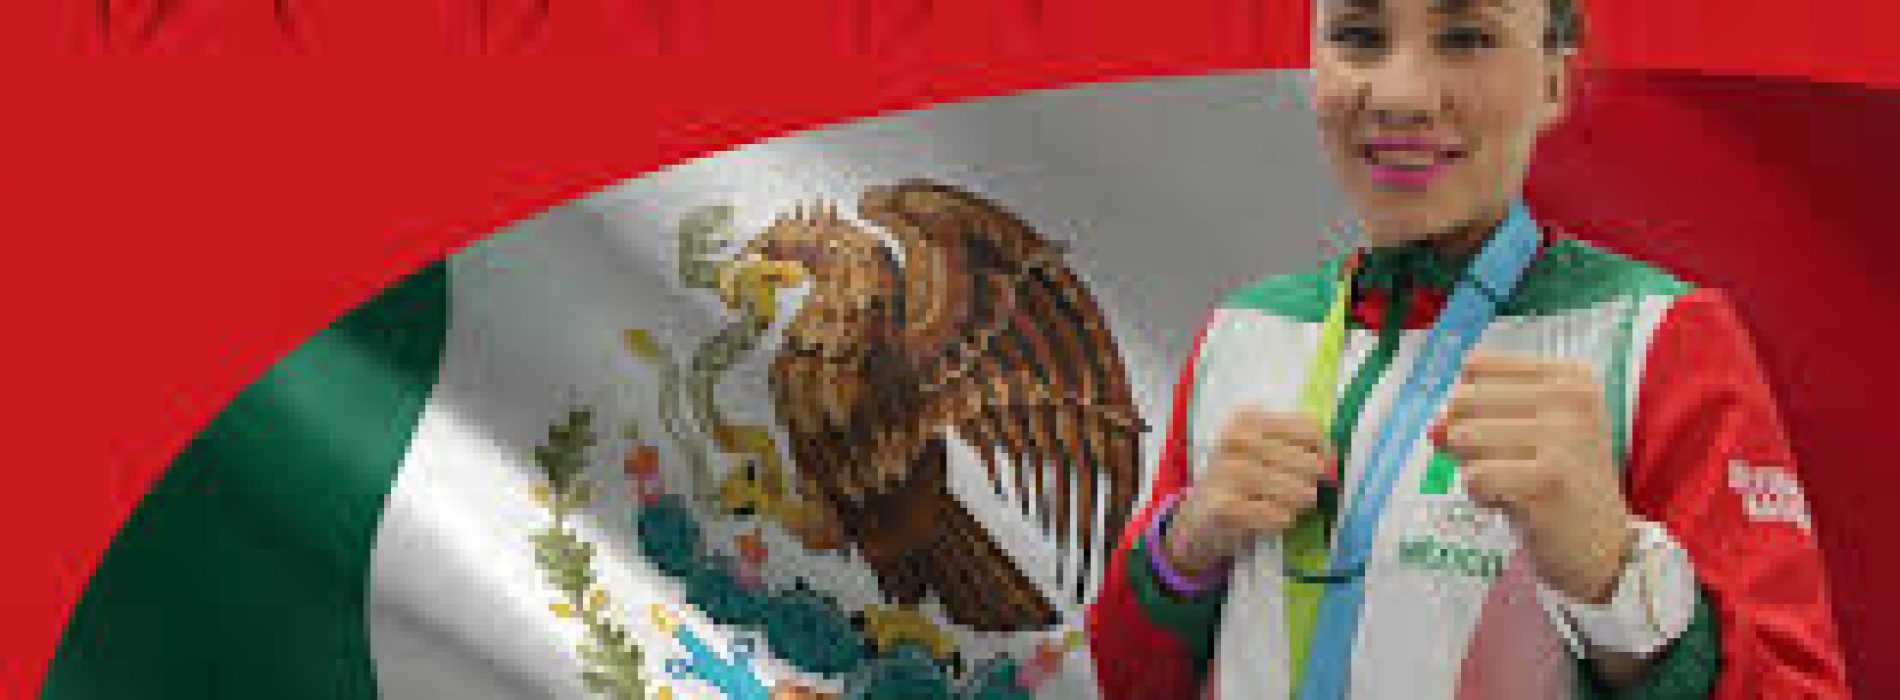 Incude Oaxaca transmitirá clases en línea con deportistas destacados